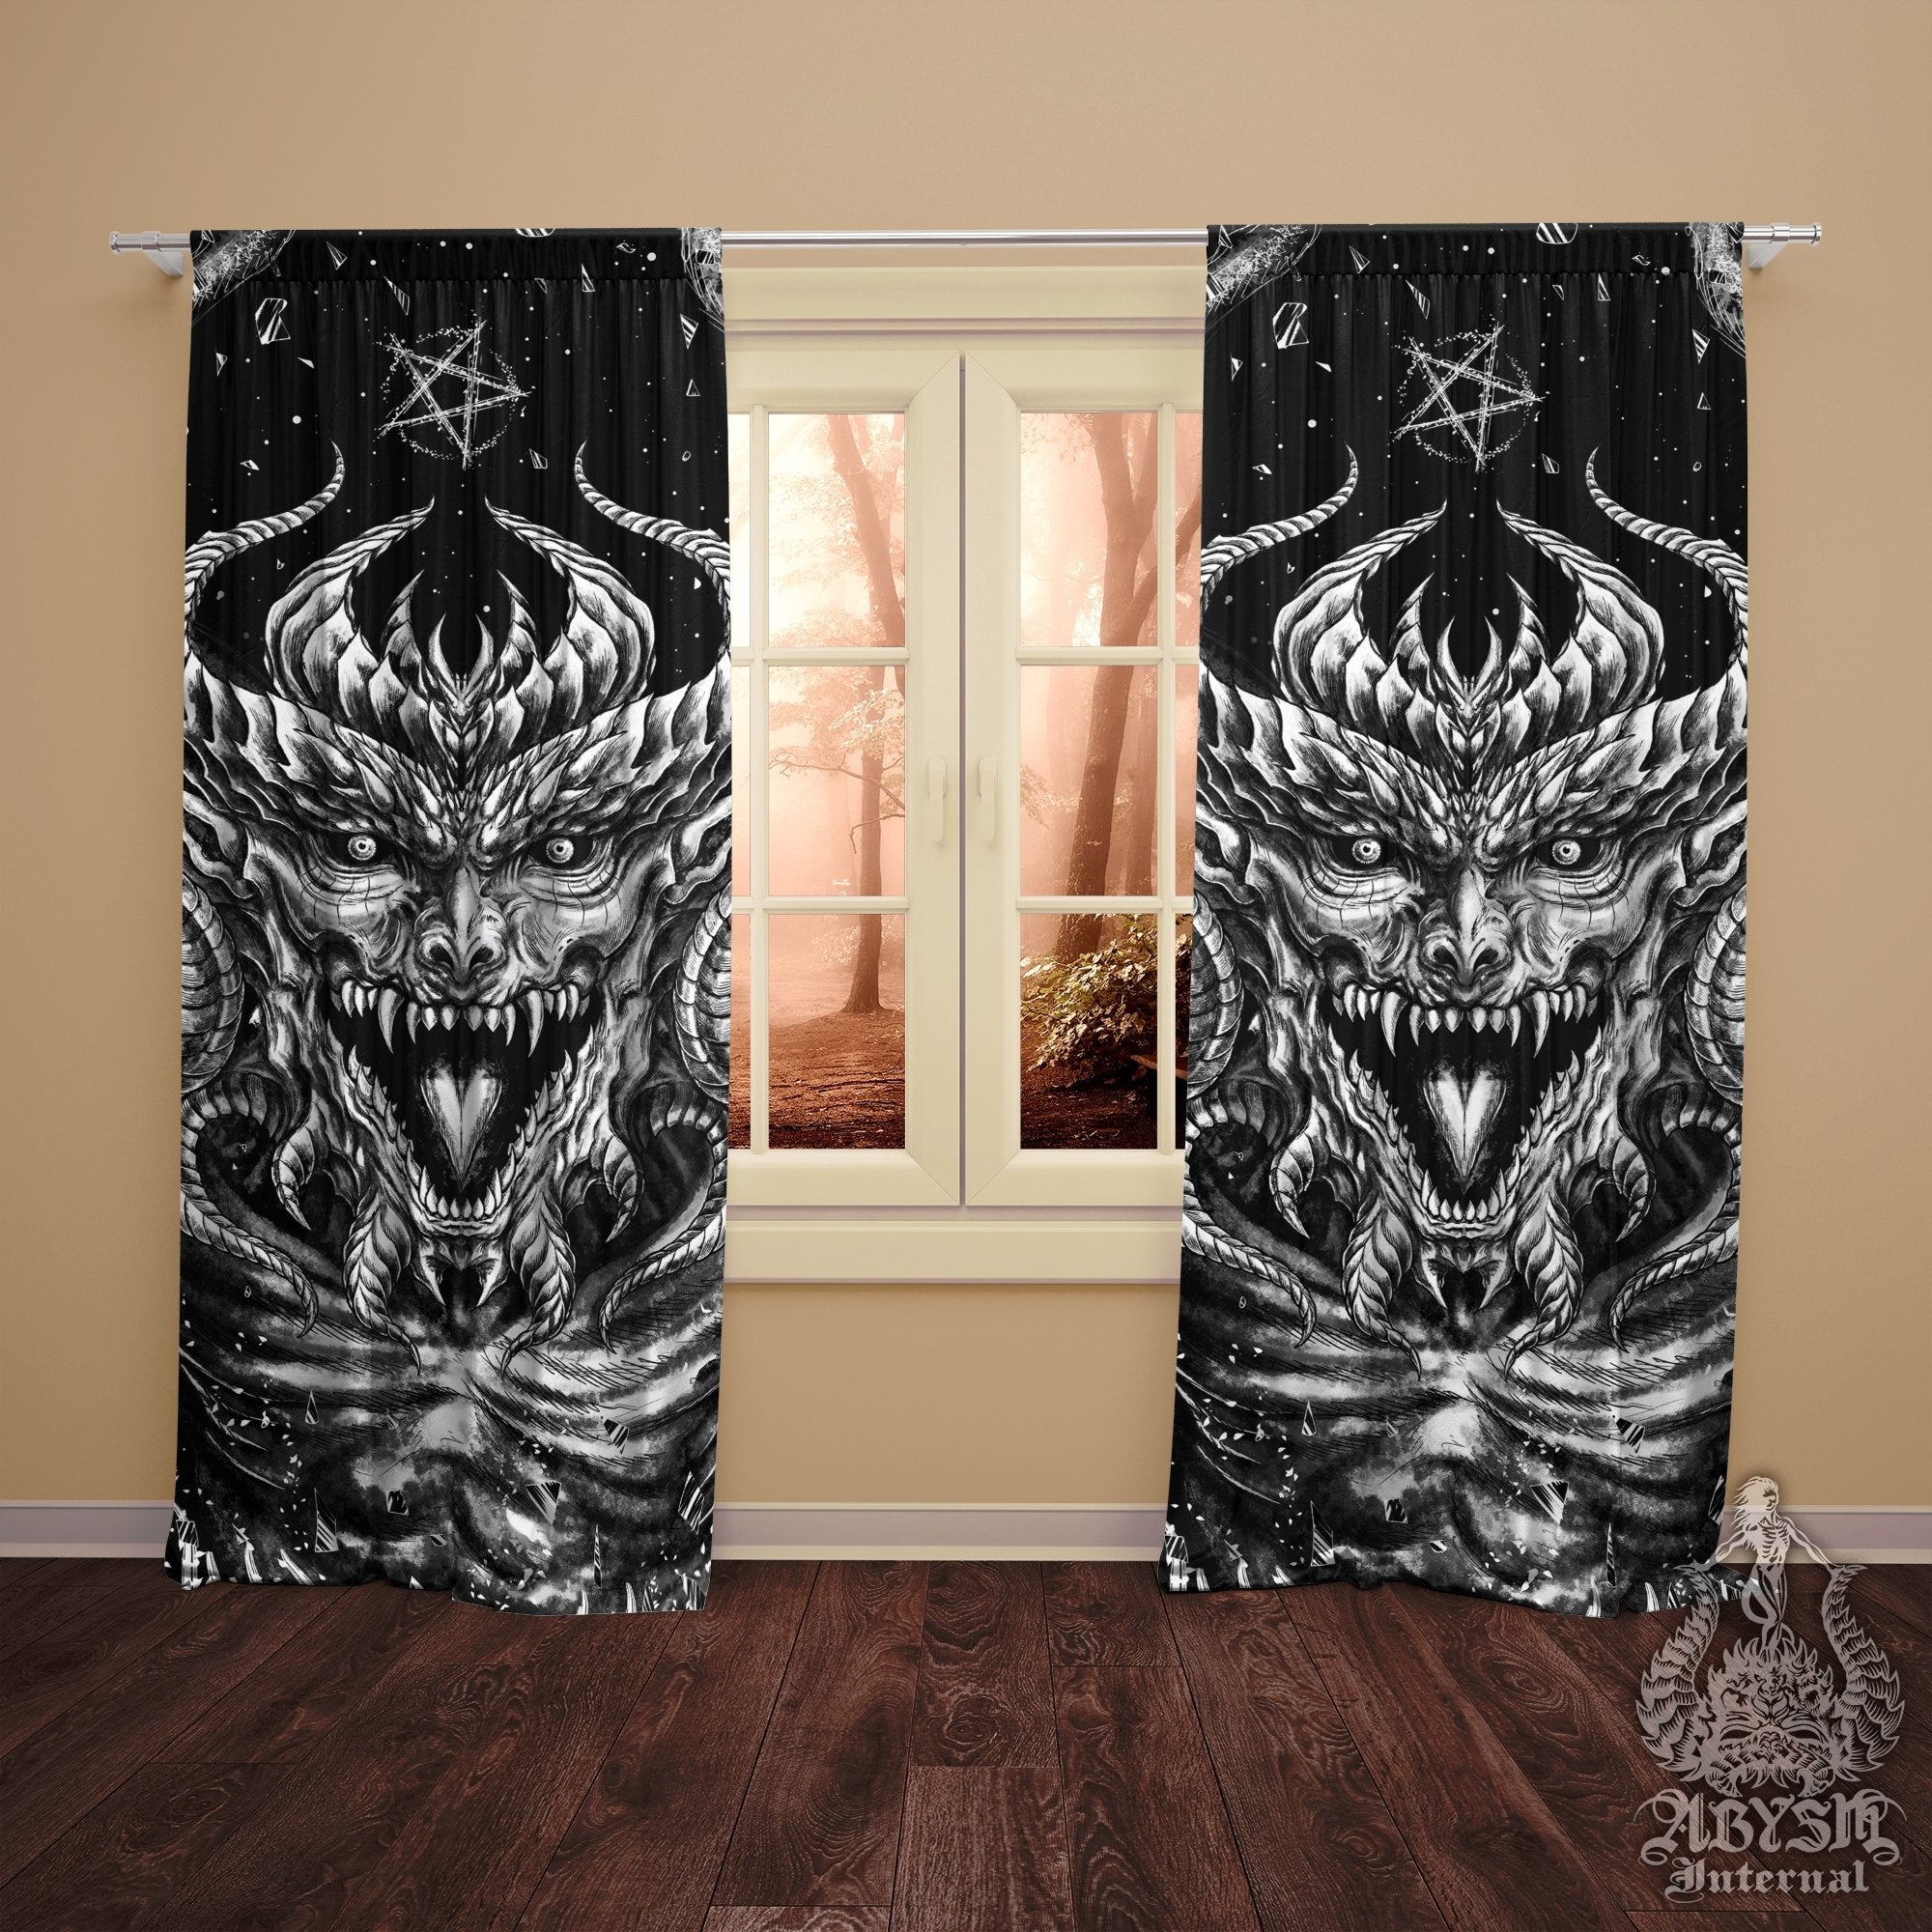 The Devil Blackout Curtains, Long Window Panels, Macabre Art Print, Satanic Room Decor - Gothic Hell - Abysm Internal